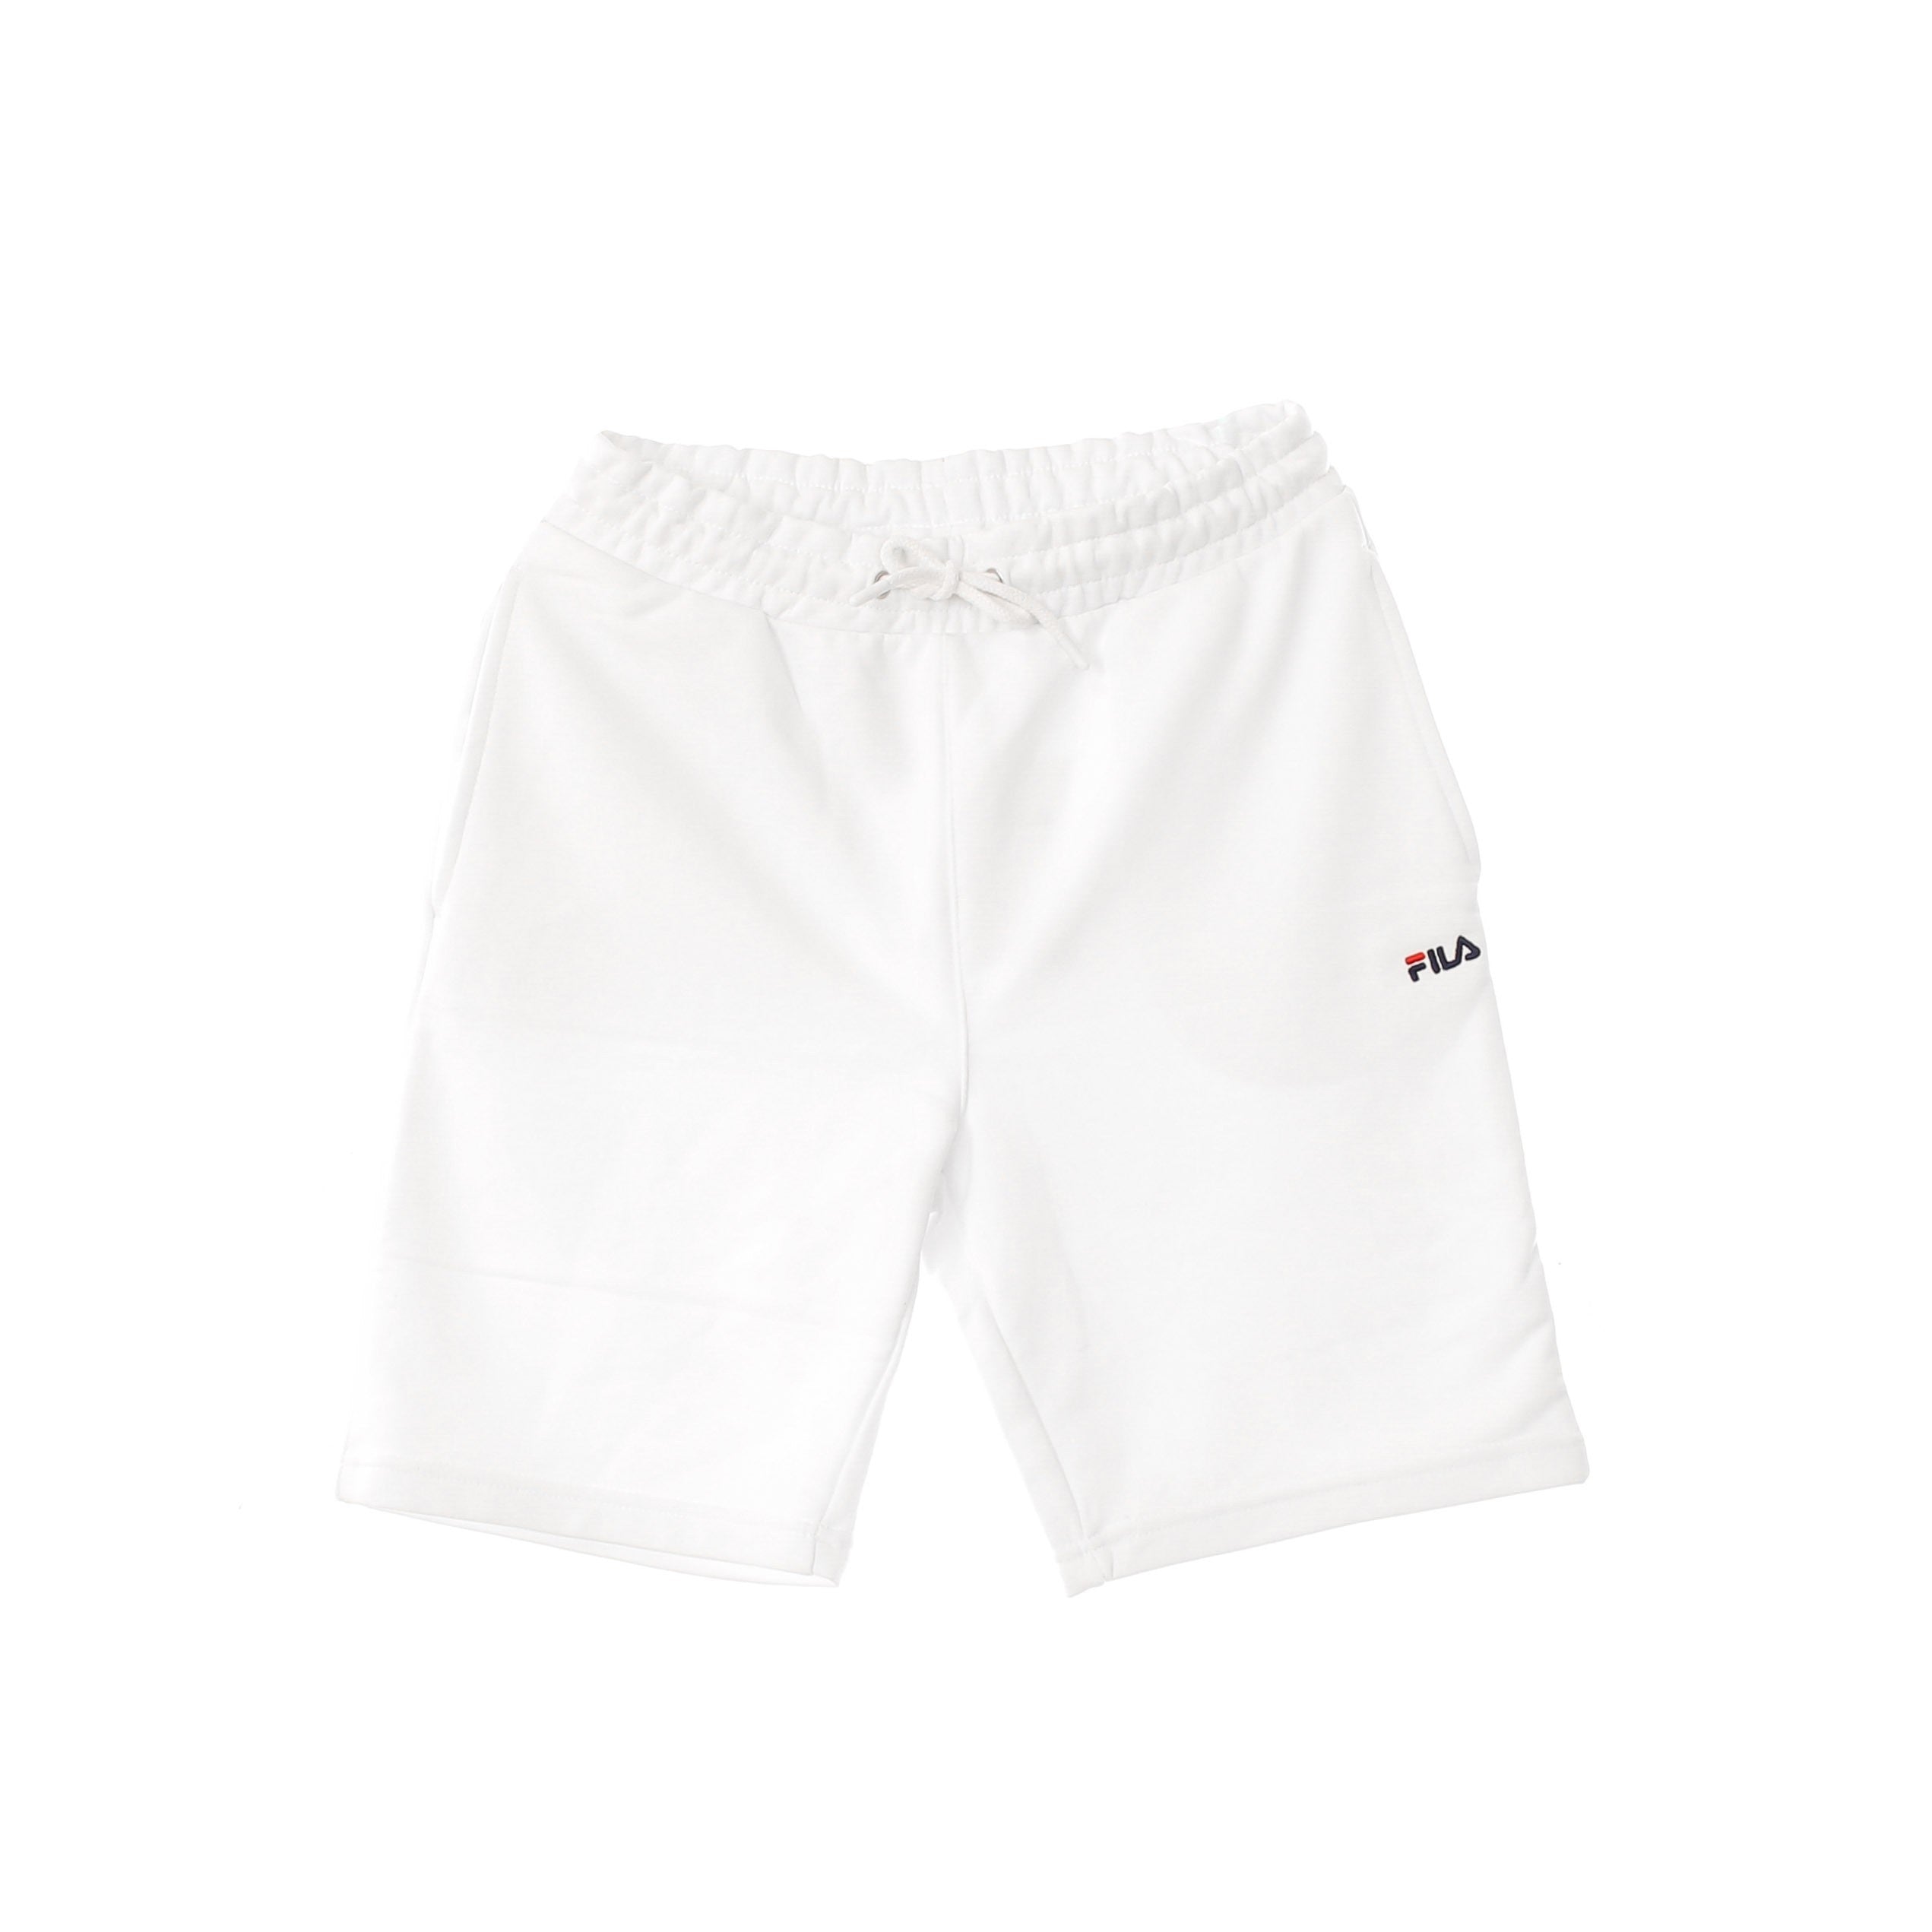 Eldon Sweat Shorts Men's Tracksuit Shorts Bright White